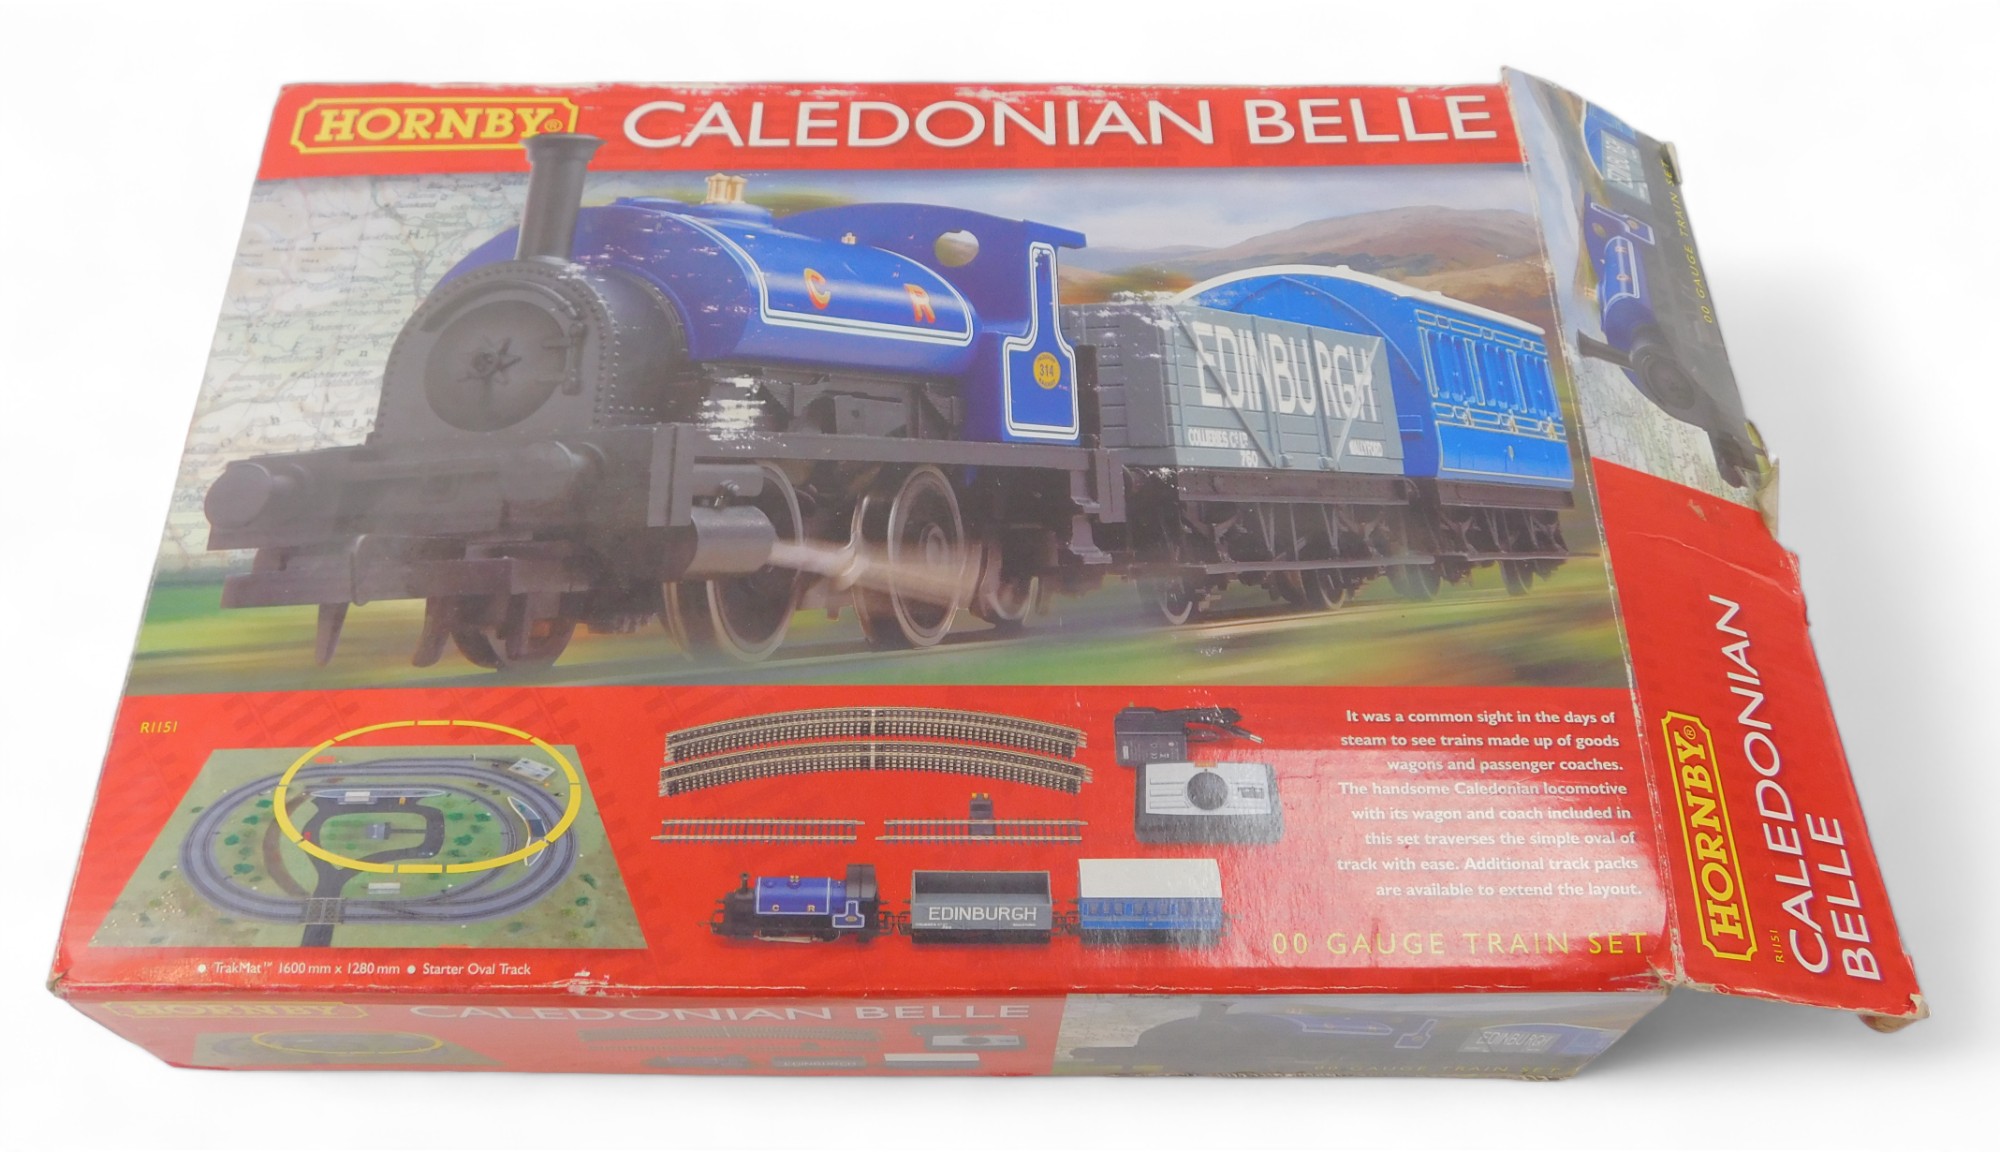 A Hornby OO gauge train set R1151 Caledonian Belle, boxed.